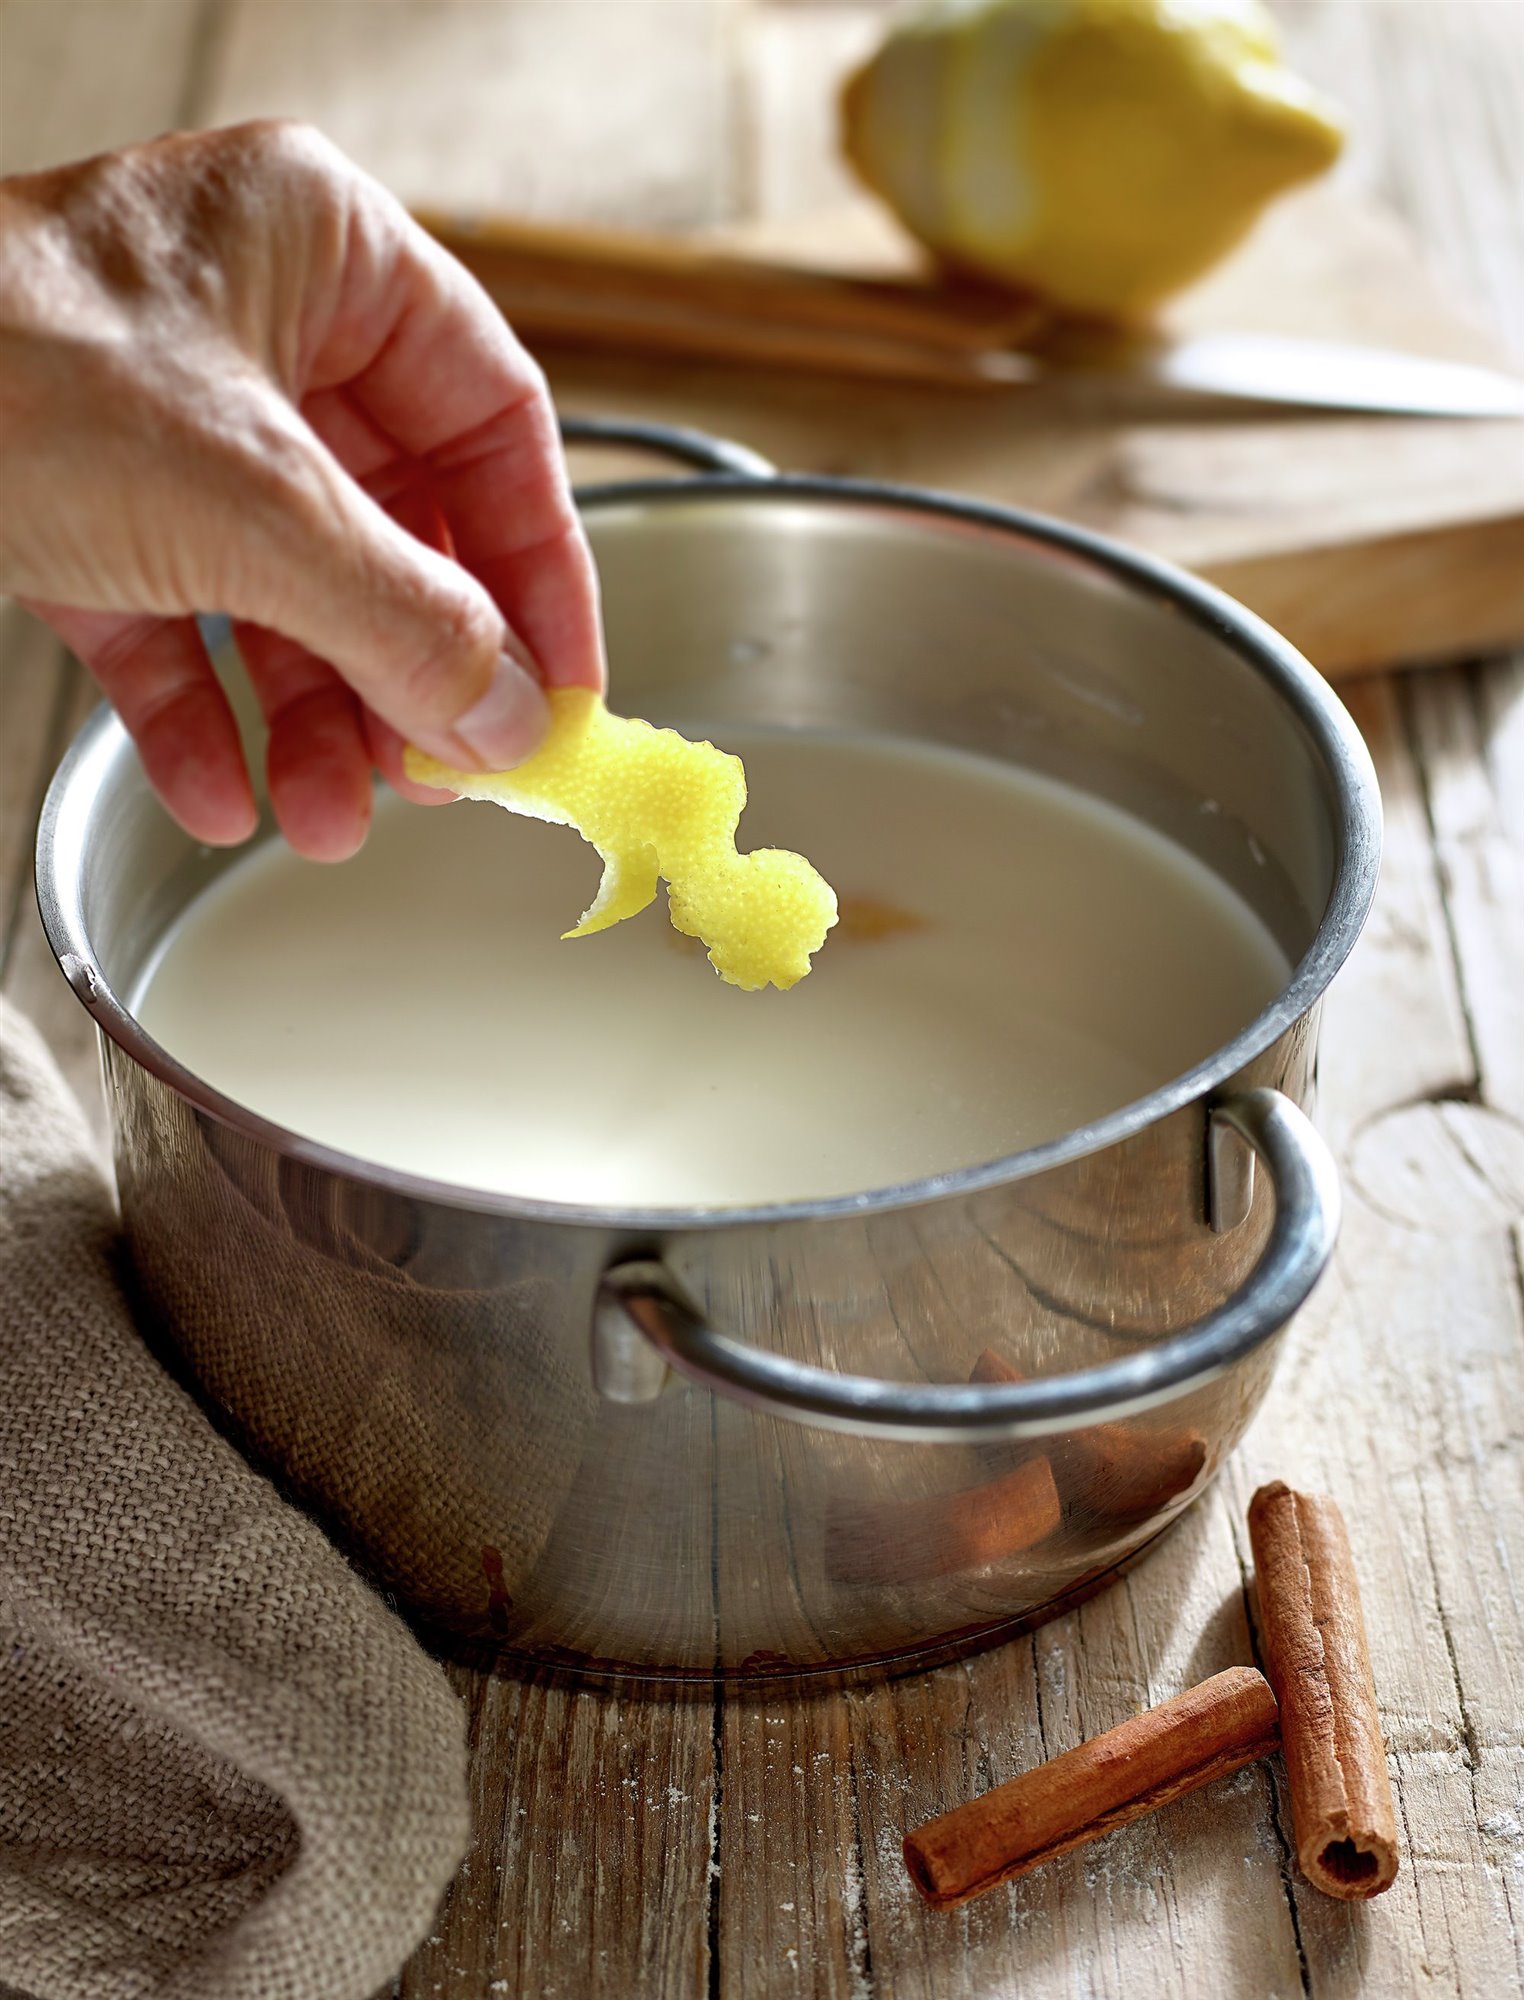 1. Echa corteza de limón a la leche